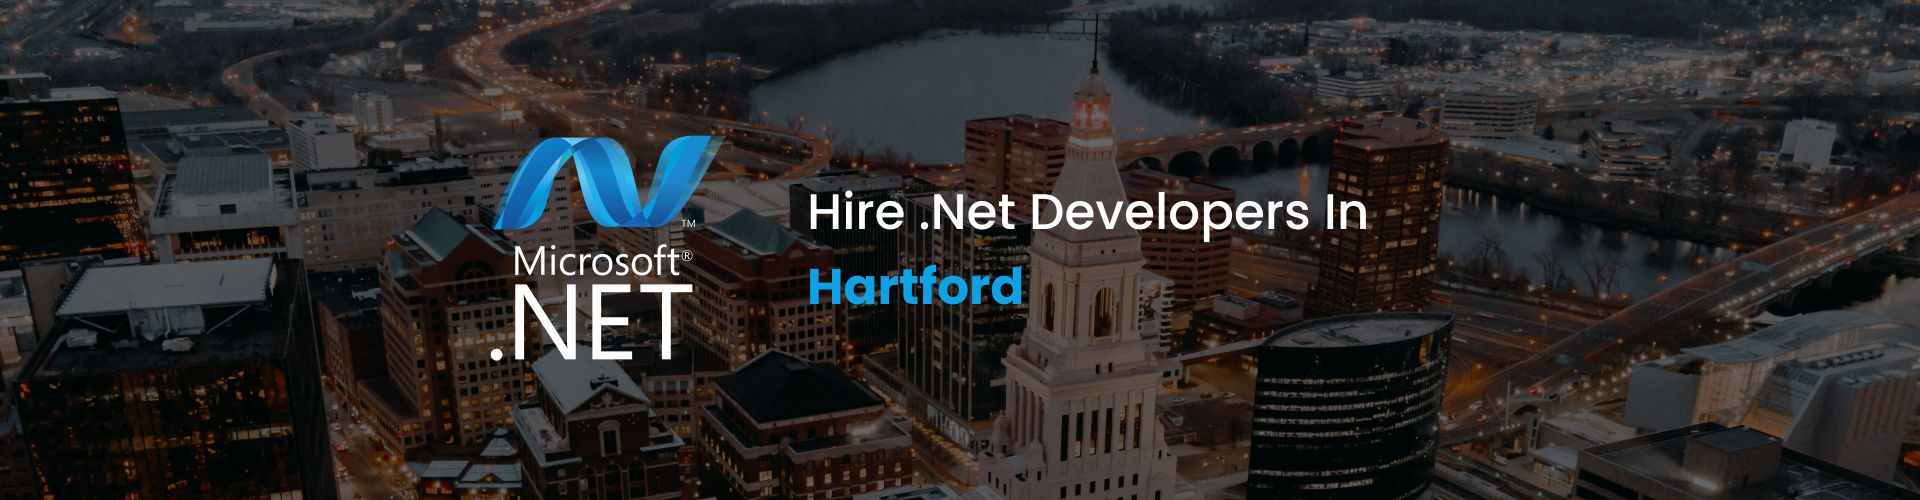 hire .net developers in hartford